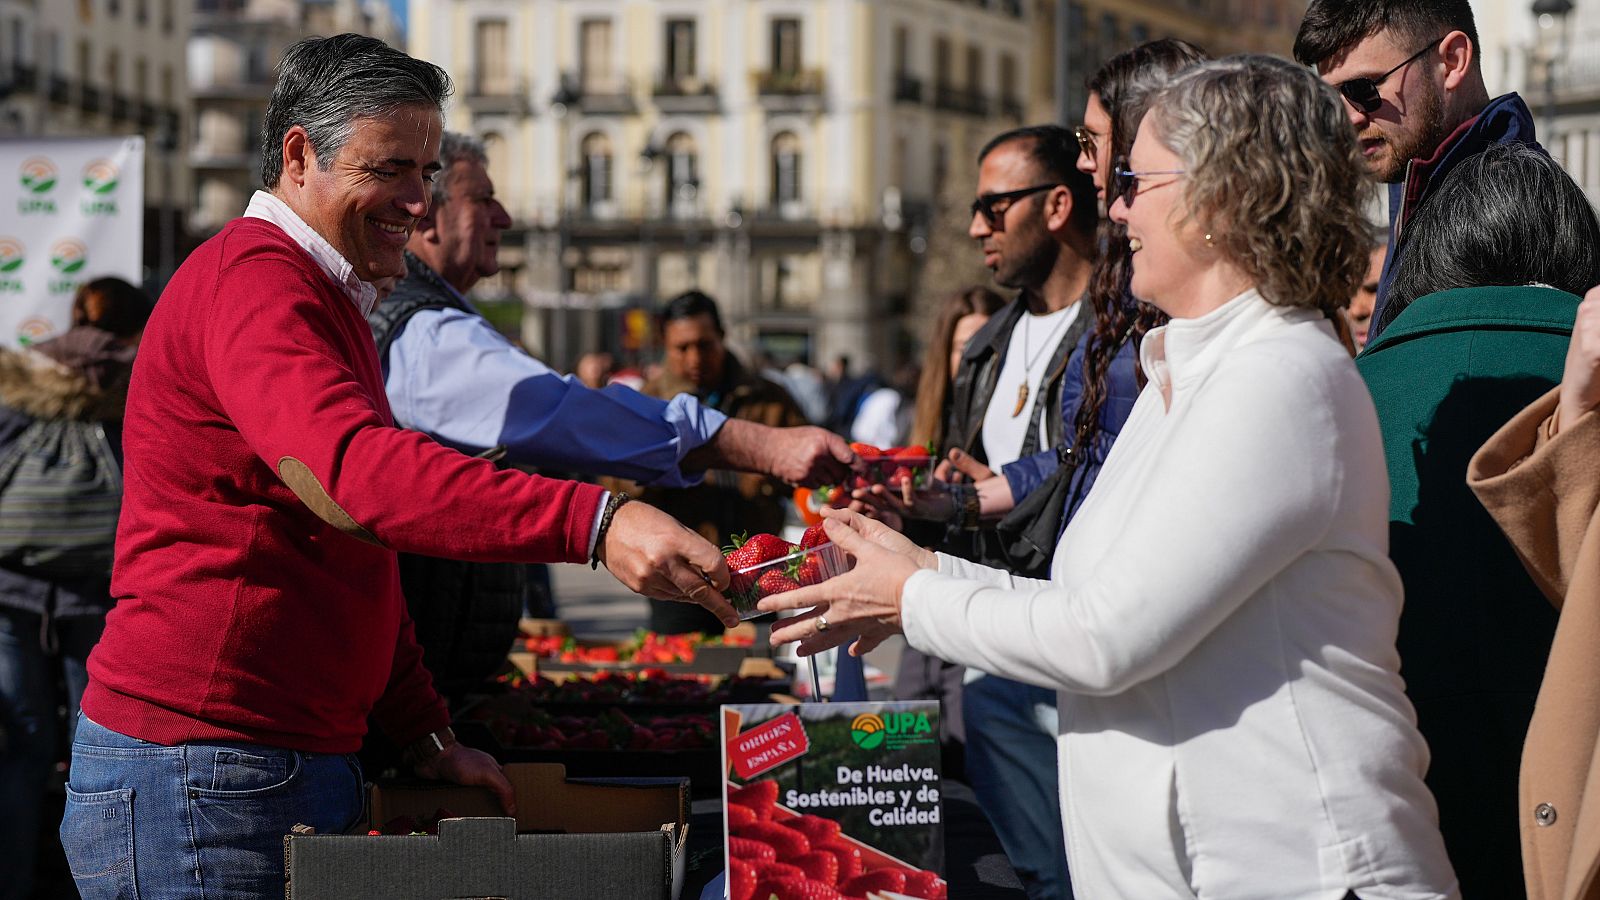 UPA reparte en Madrid fresas de Huelva "sanas y seguras"